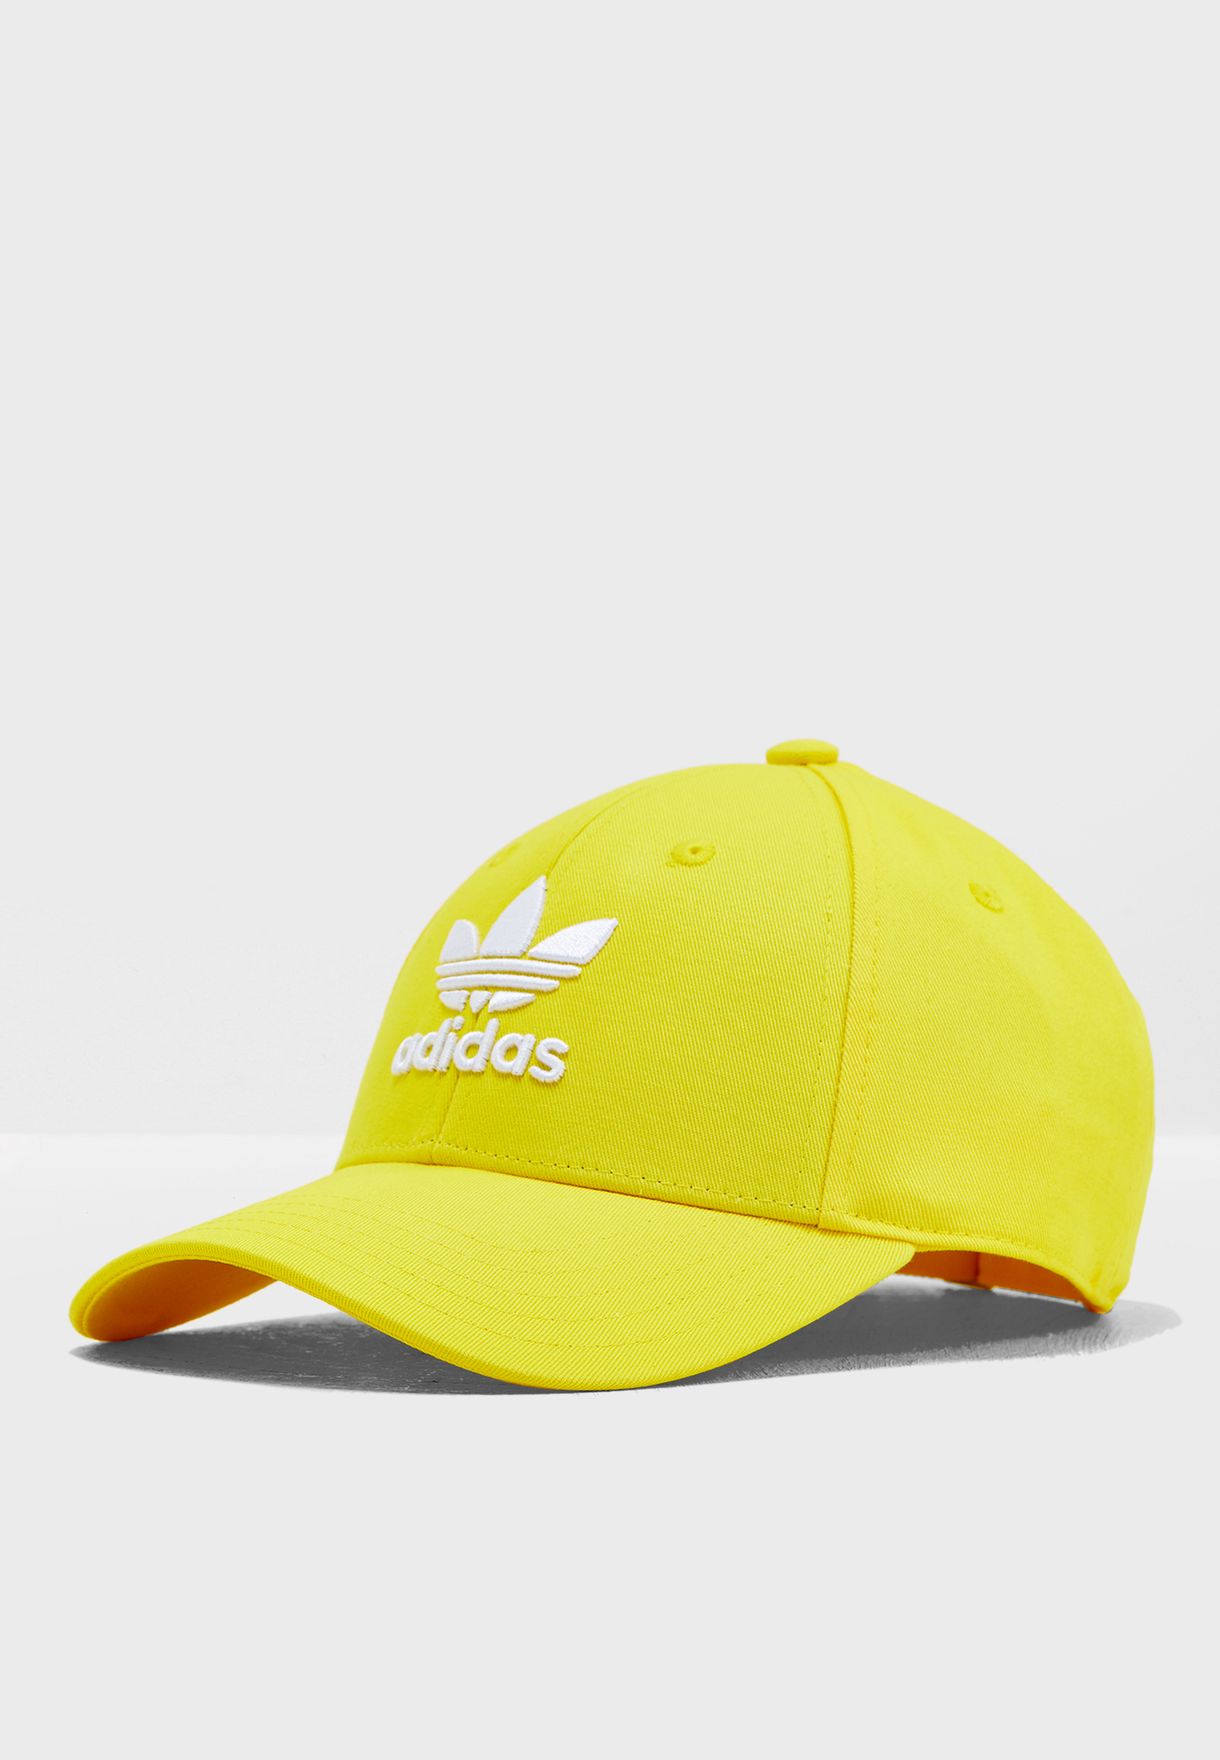 yellow adidas baseball cap